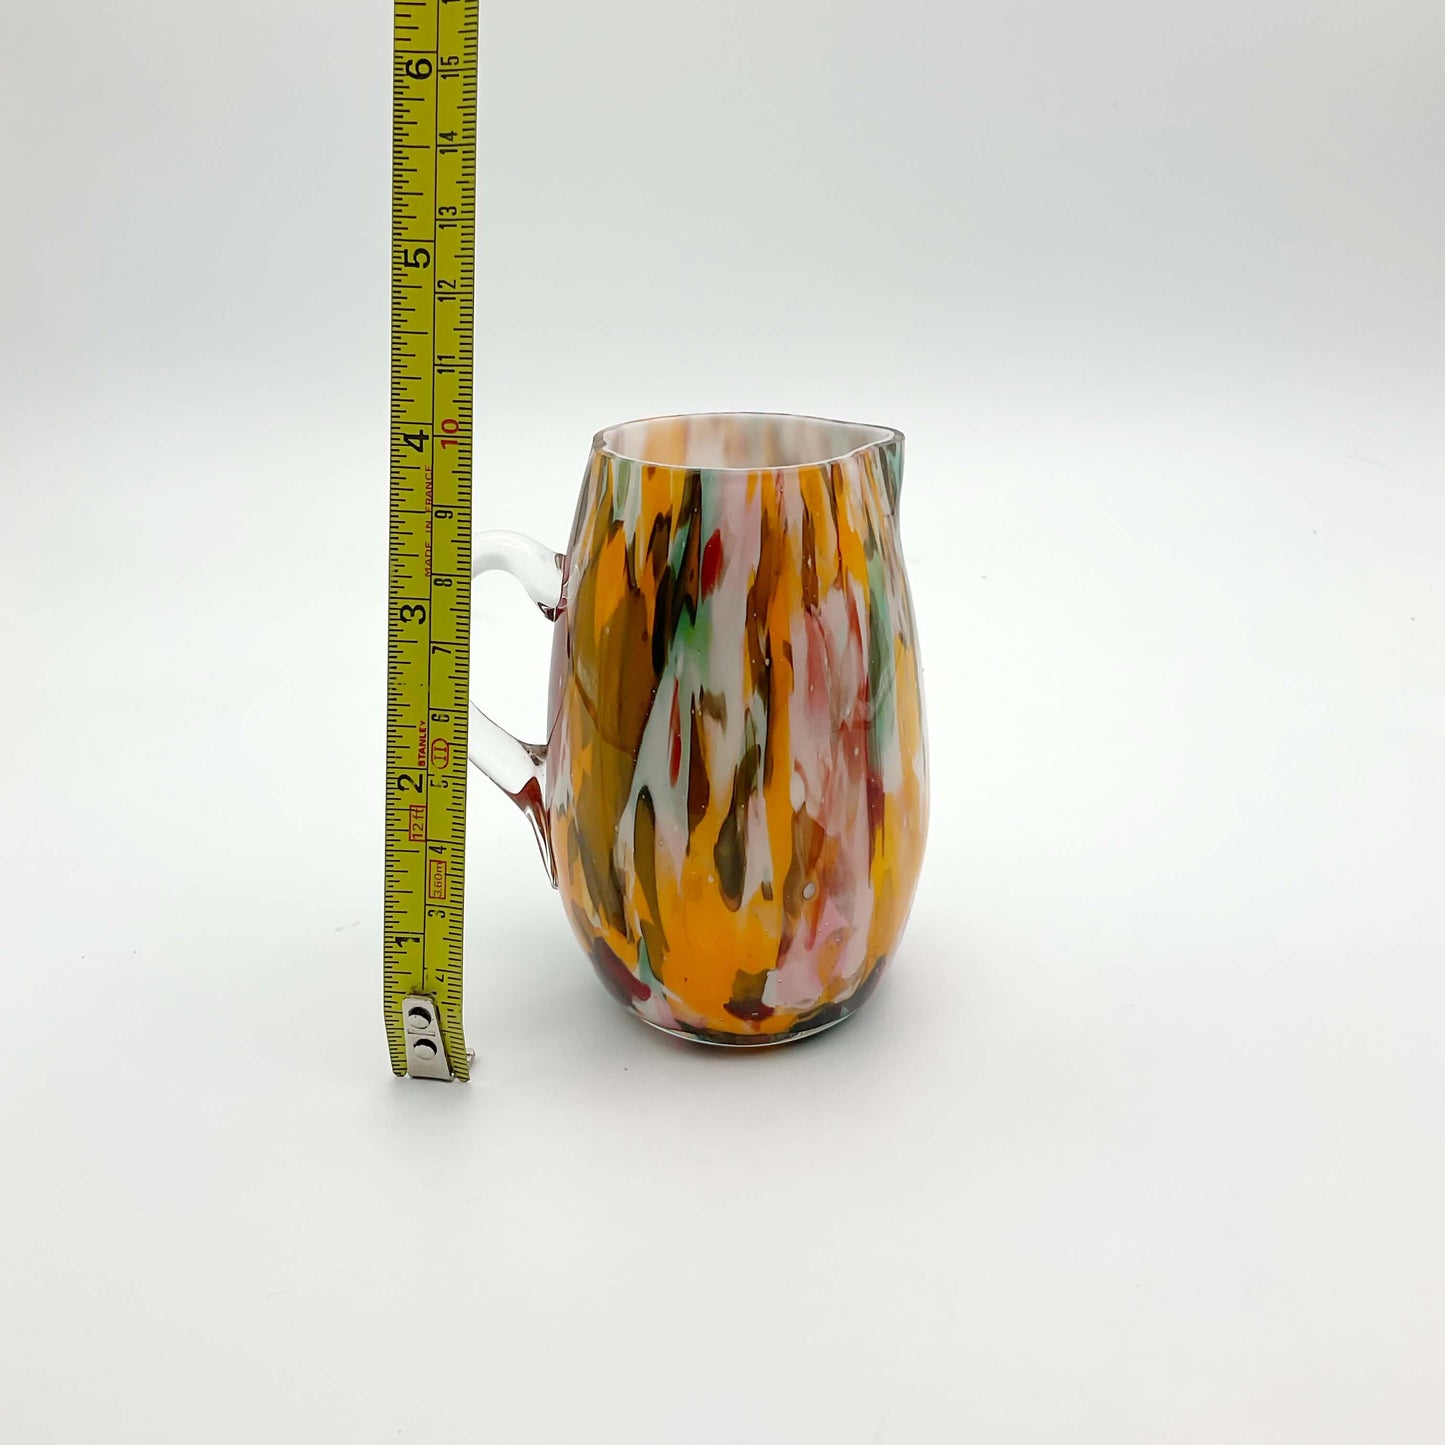 Small Handmade Vintage Art Glass Jug